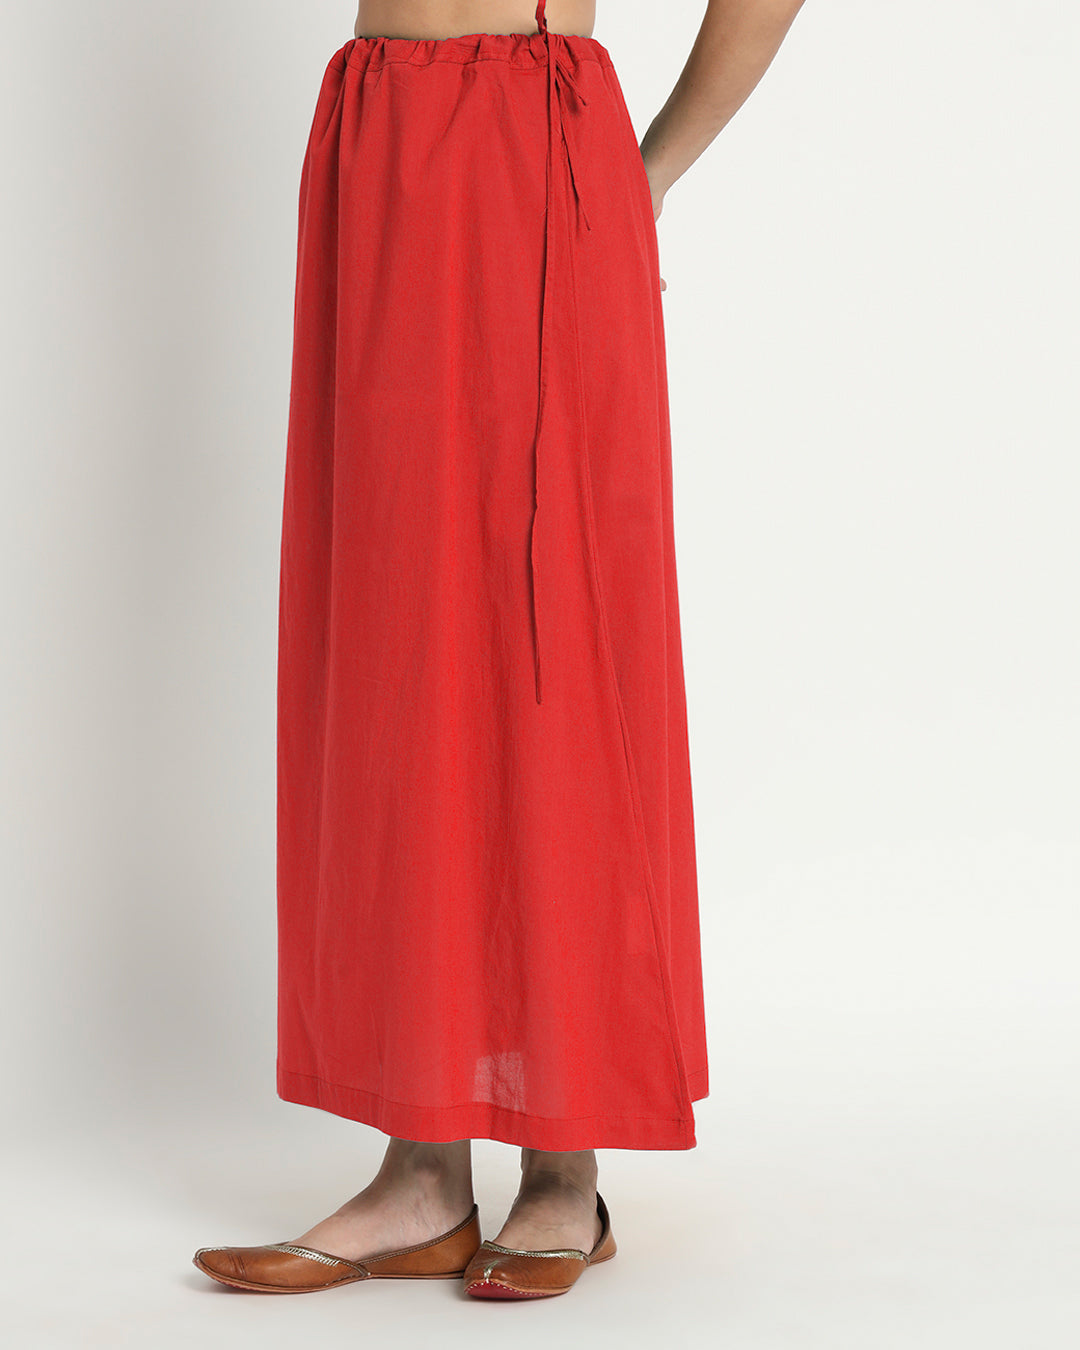 Combo: Pristine White & Classic Red Peekaboo Petticoat- Set of 2